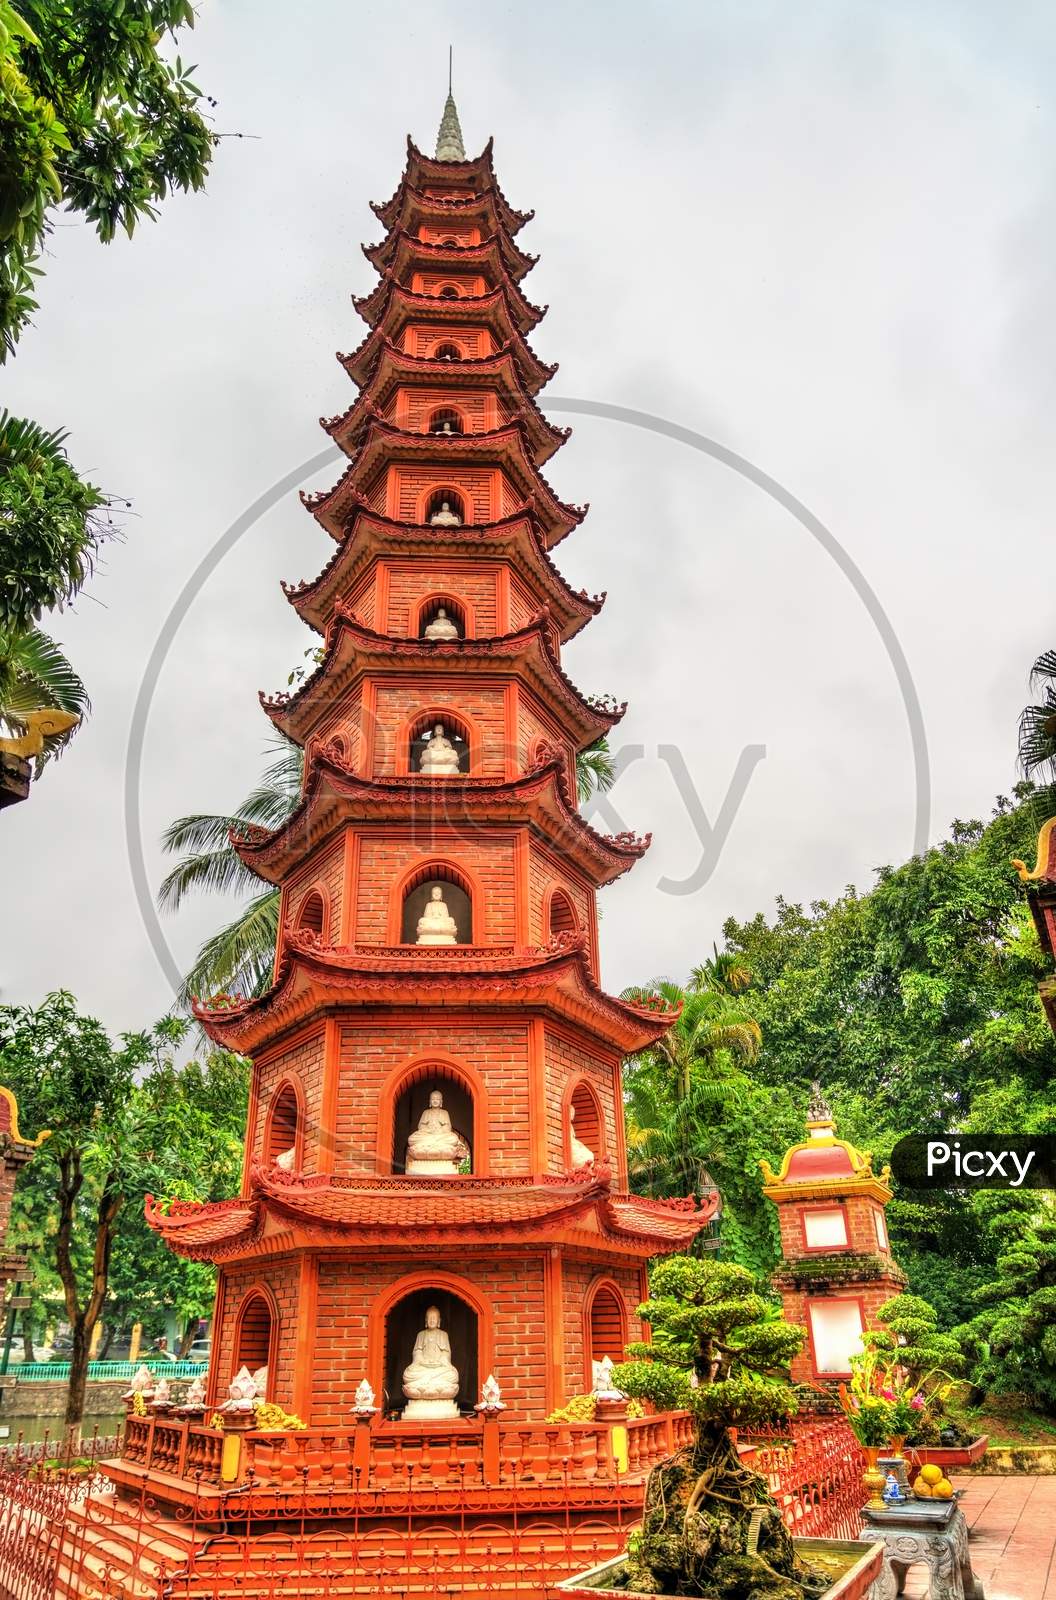 Tran Quoc Pagoda In Hanoi, Vietnam